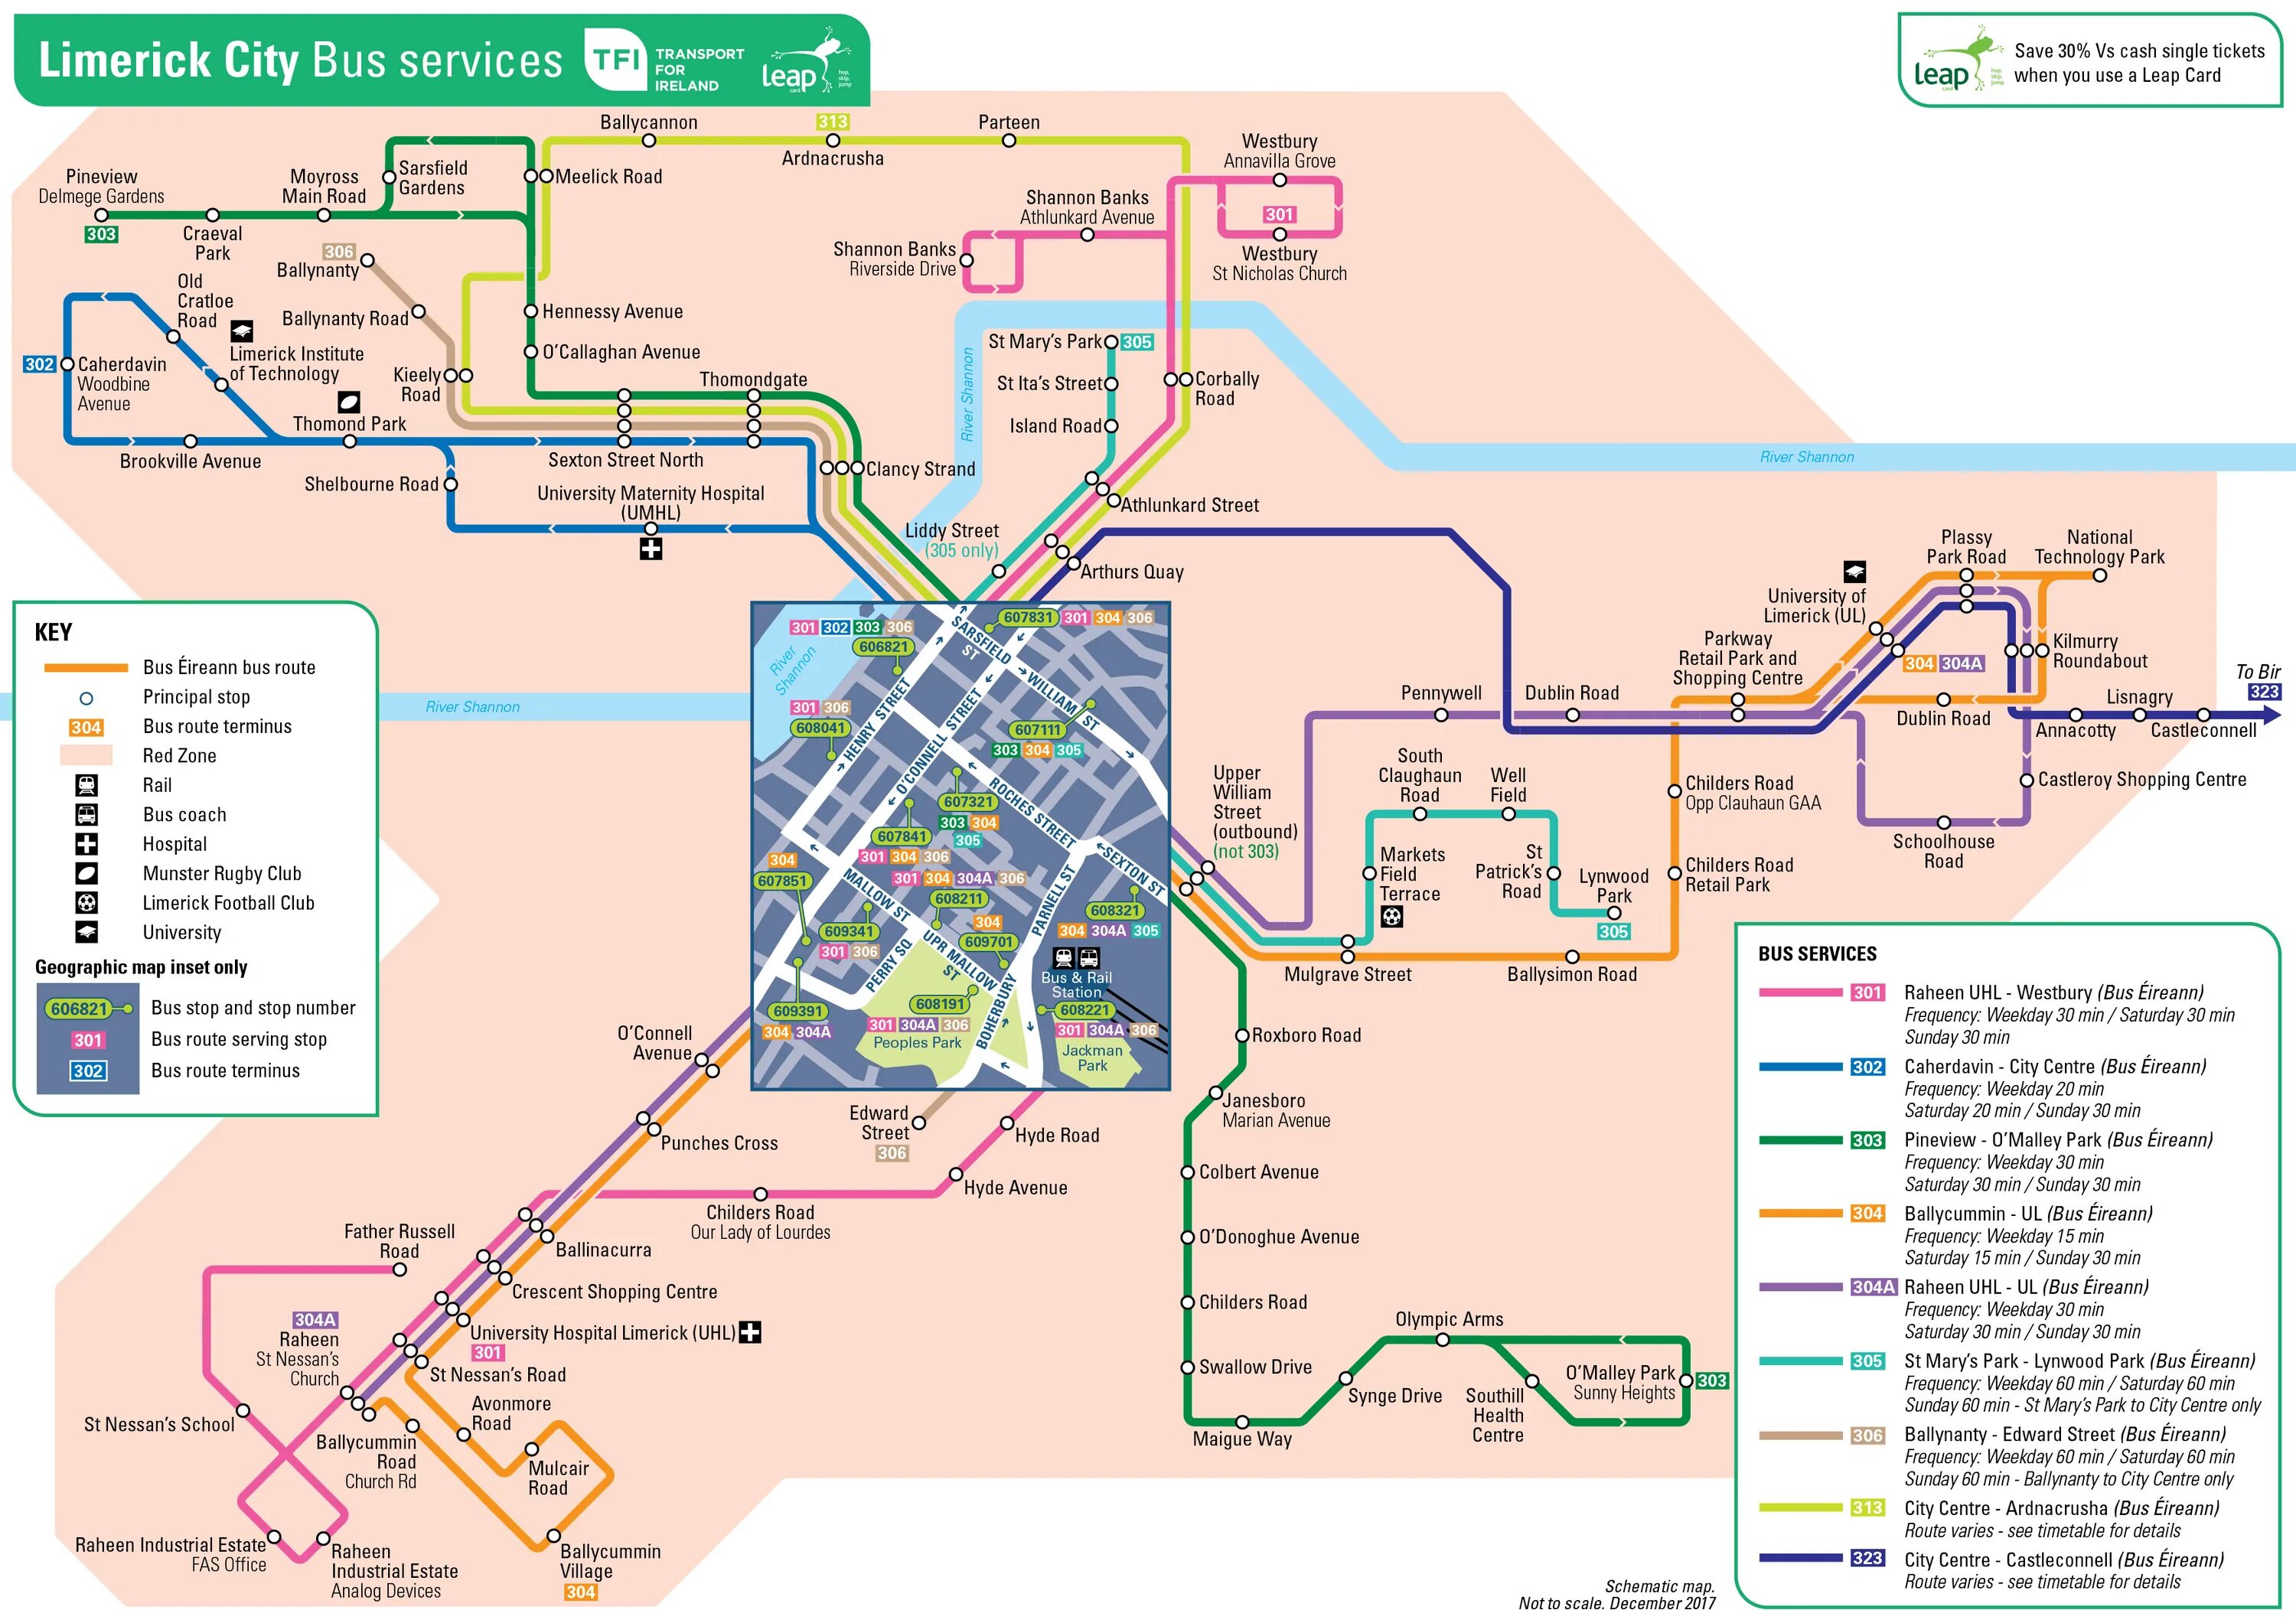 Карта автобусов купить. The Bus карта. Transport Dublin Map. Dublin Bus Universal accessibility. Zones of Dublin transport.